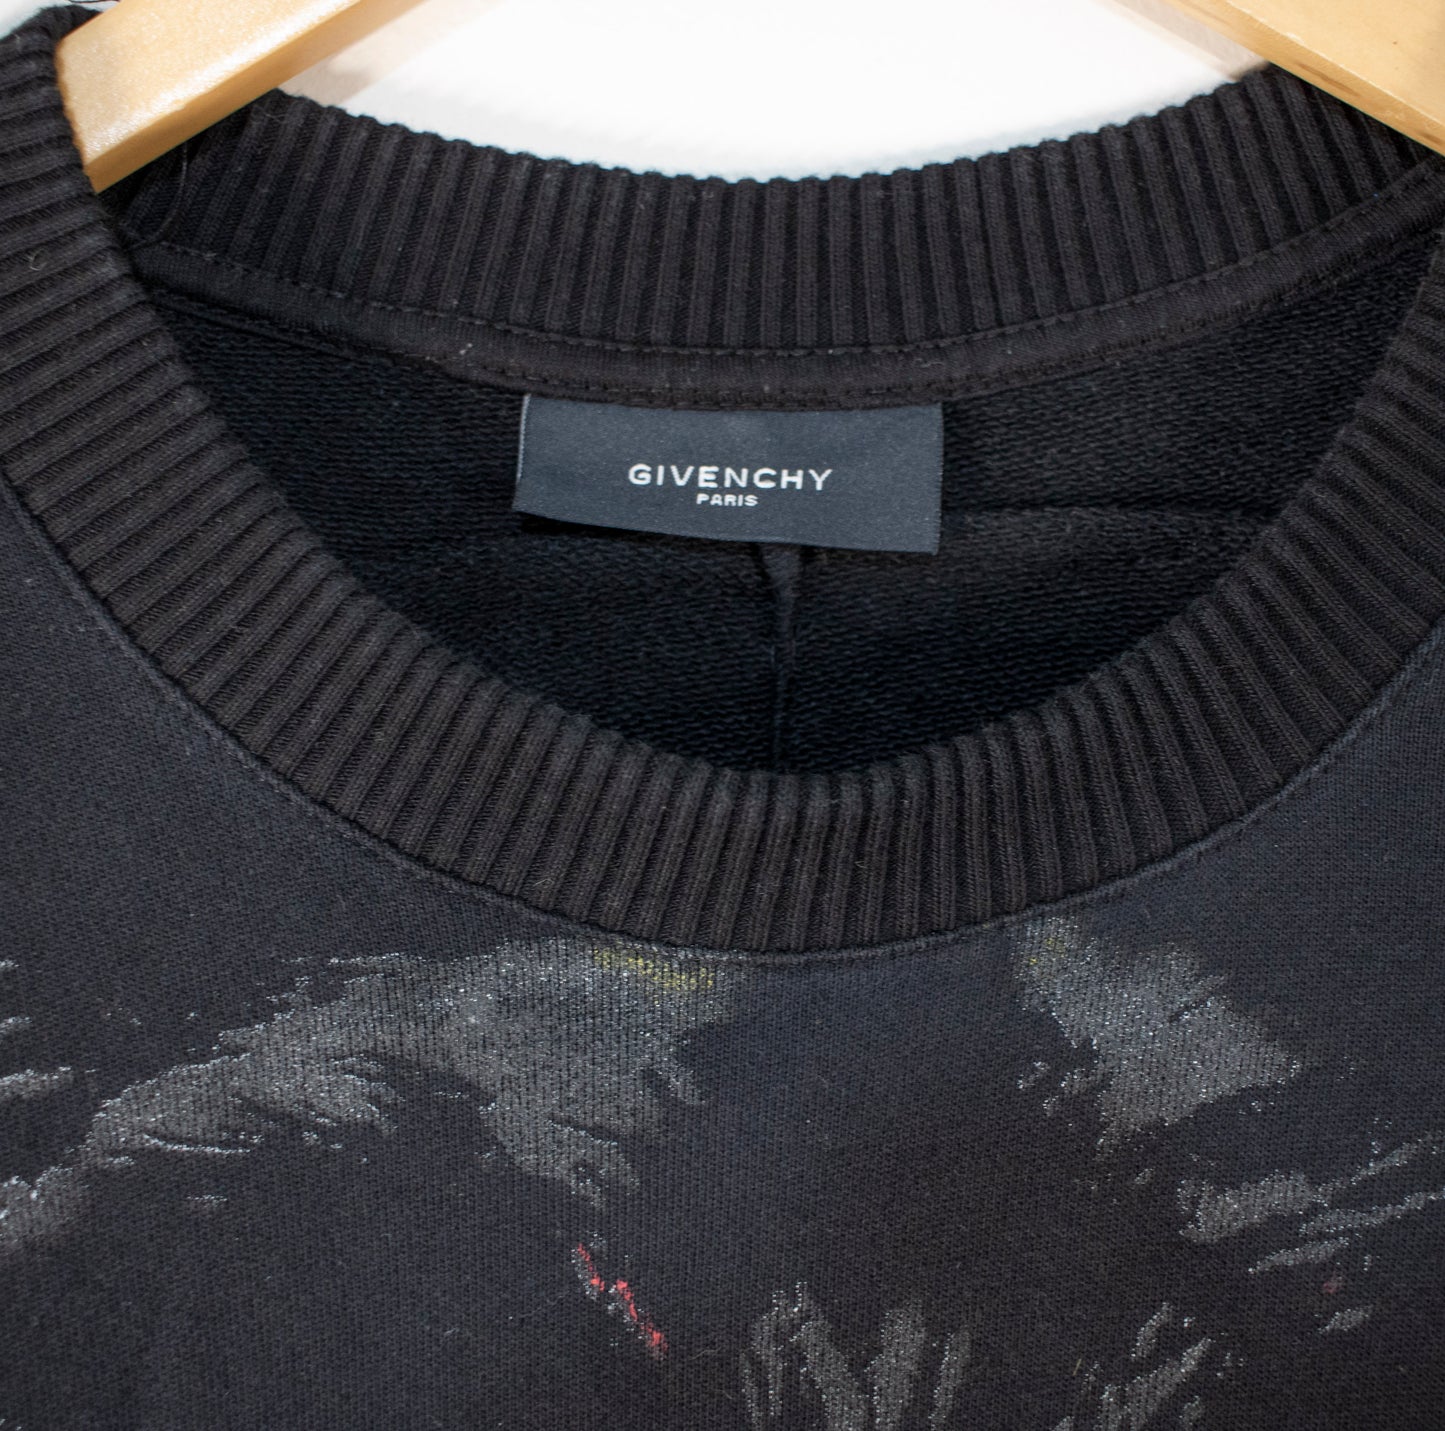 Givenchy sweatshirt